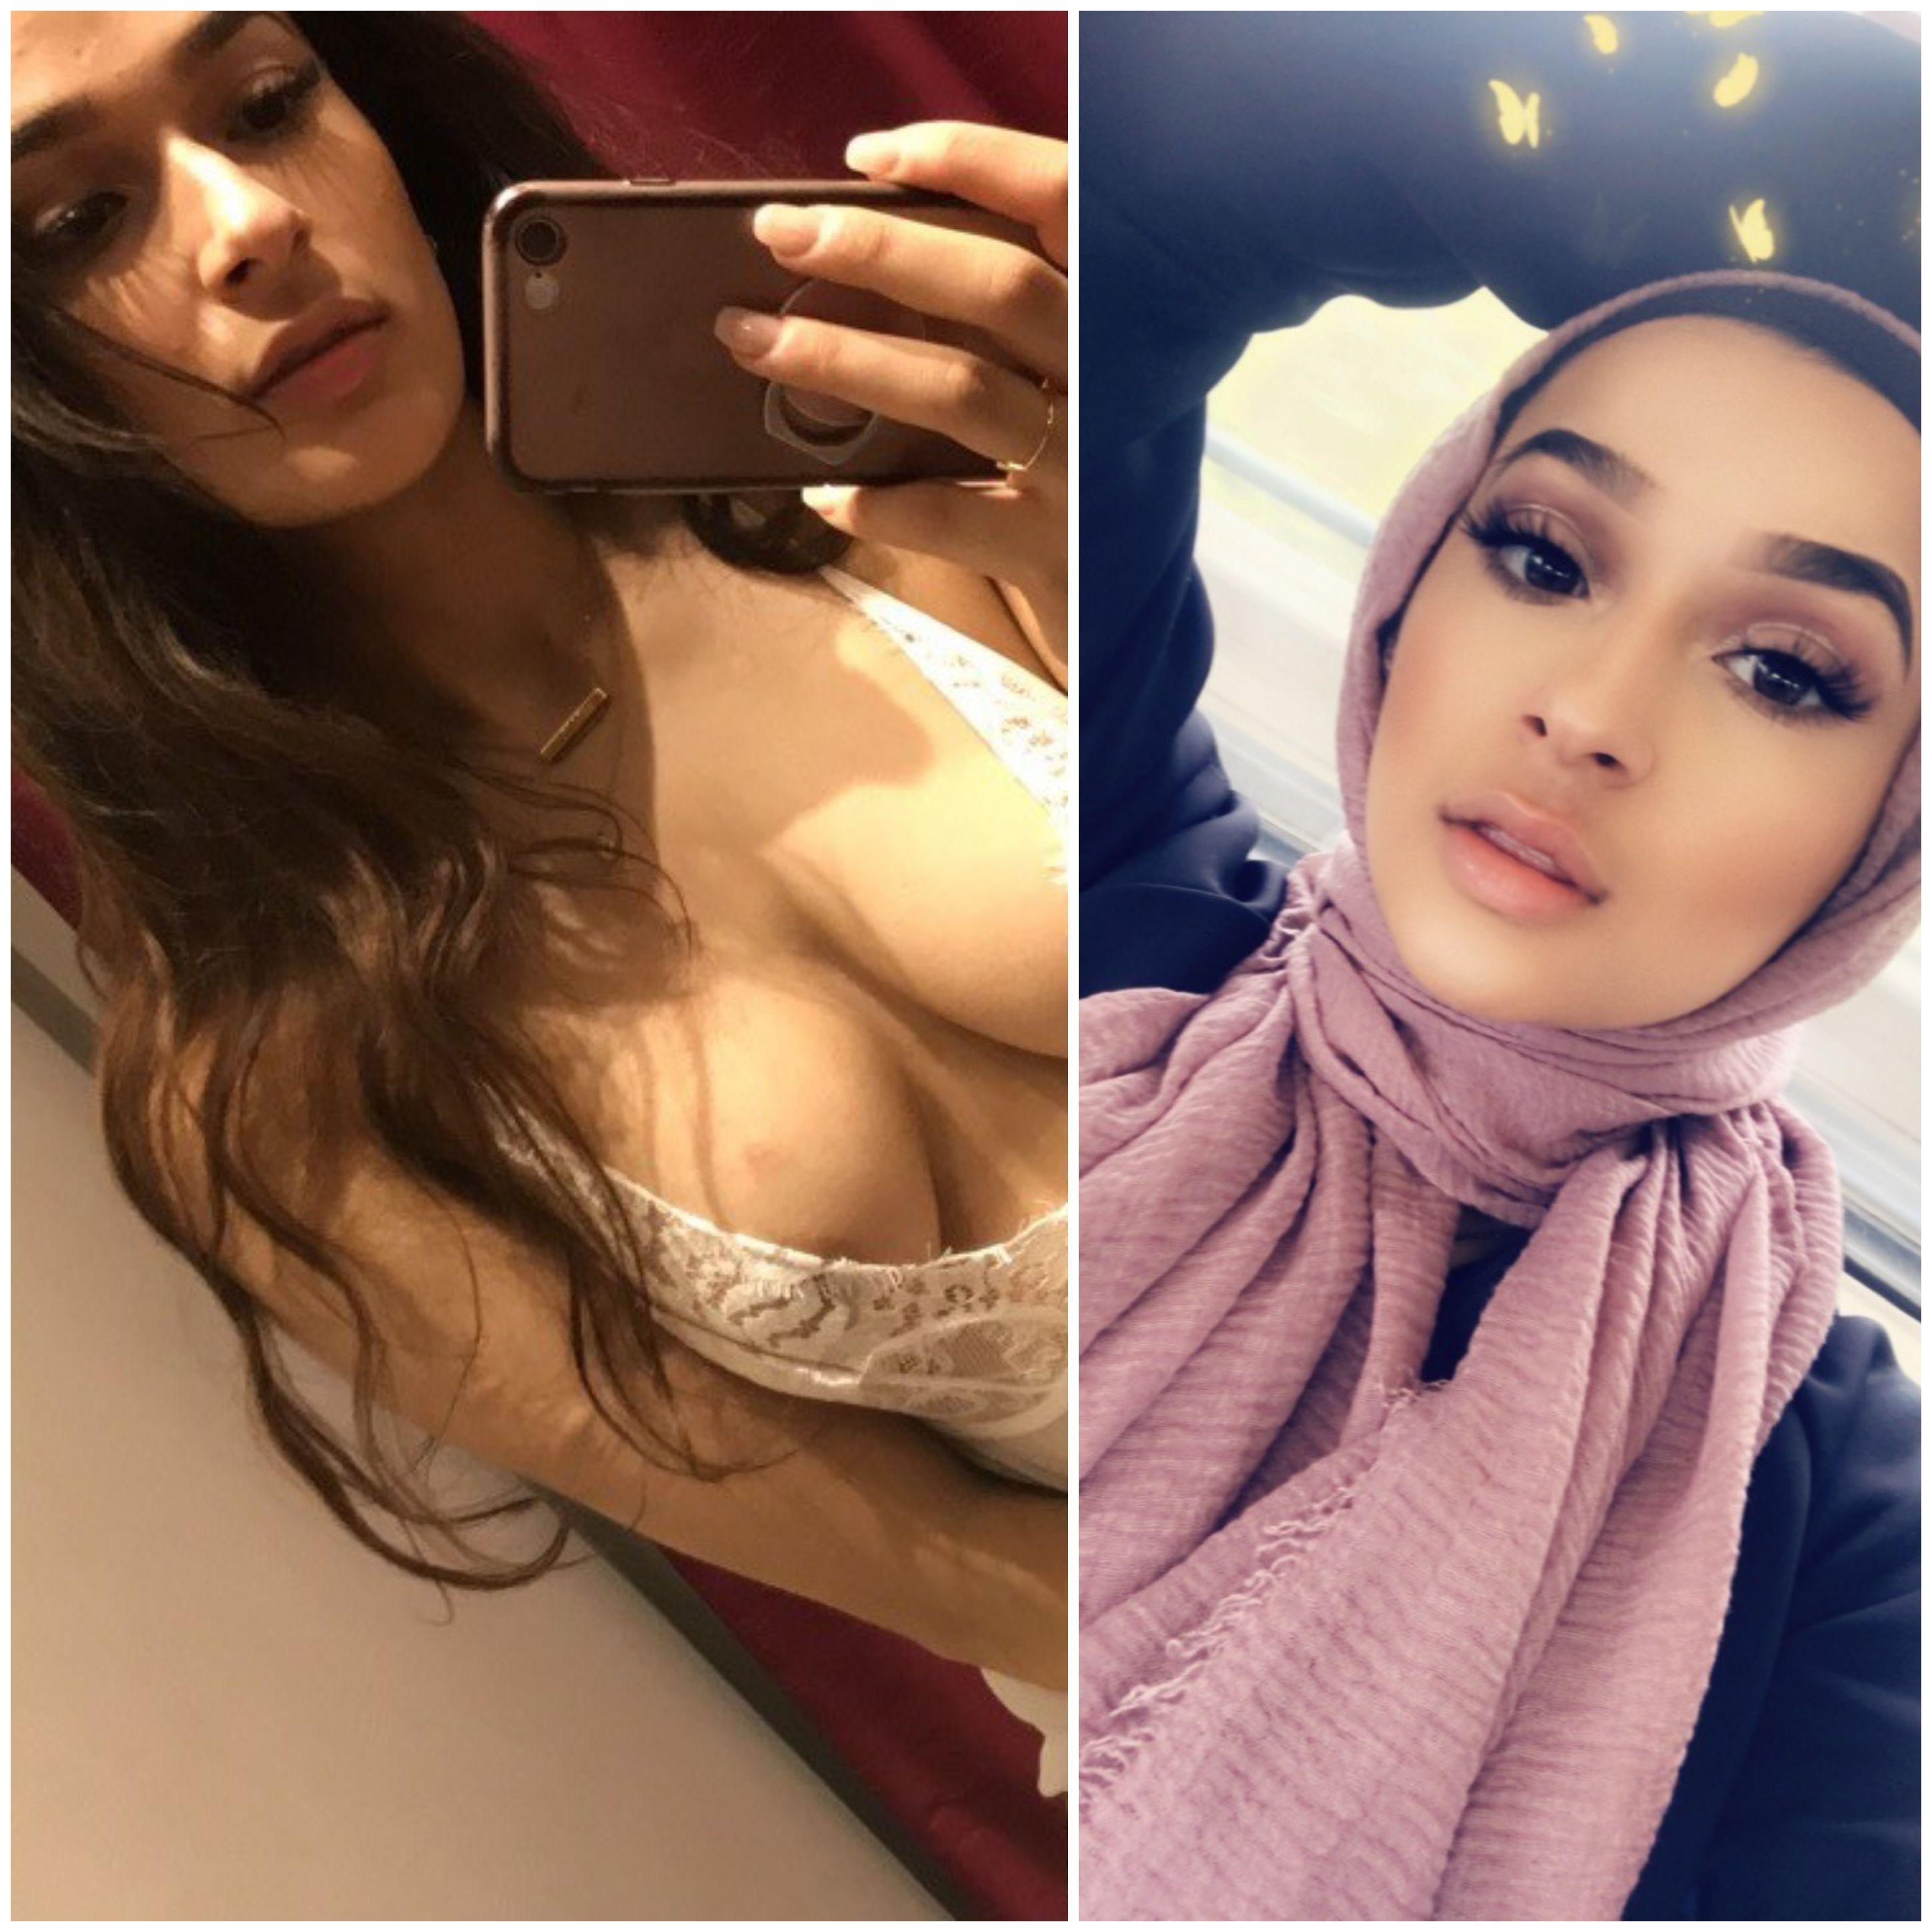 Hijabi girl nude album in comments